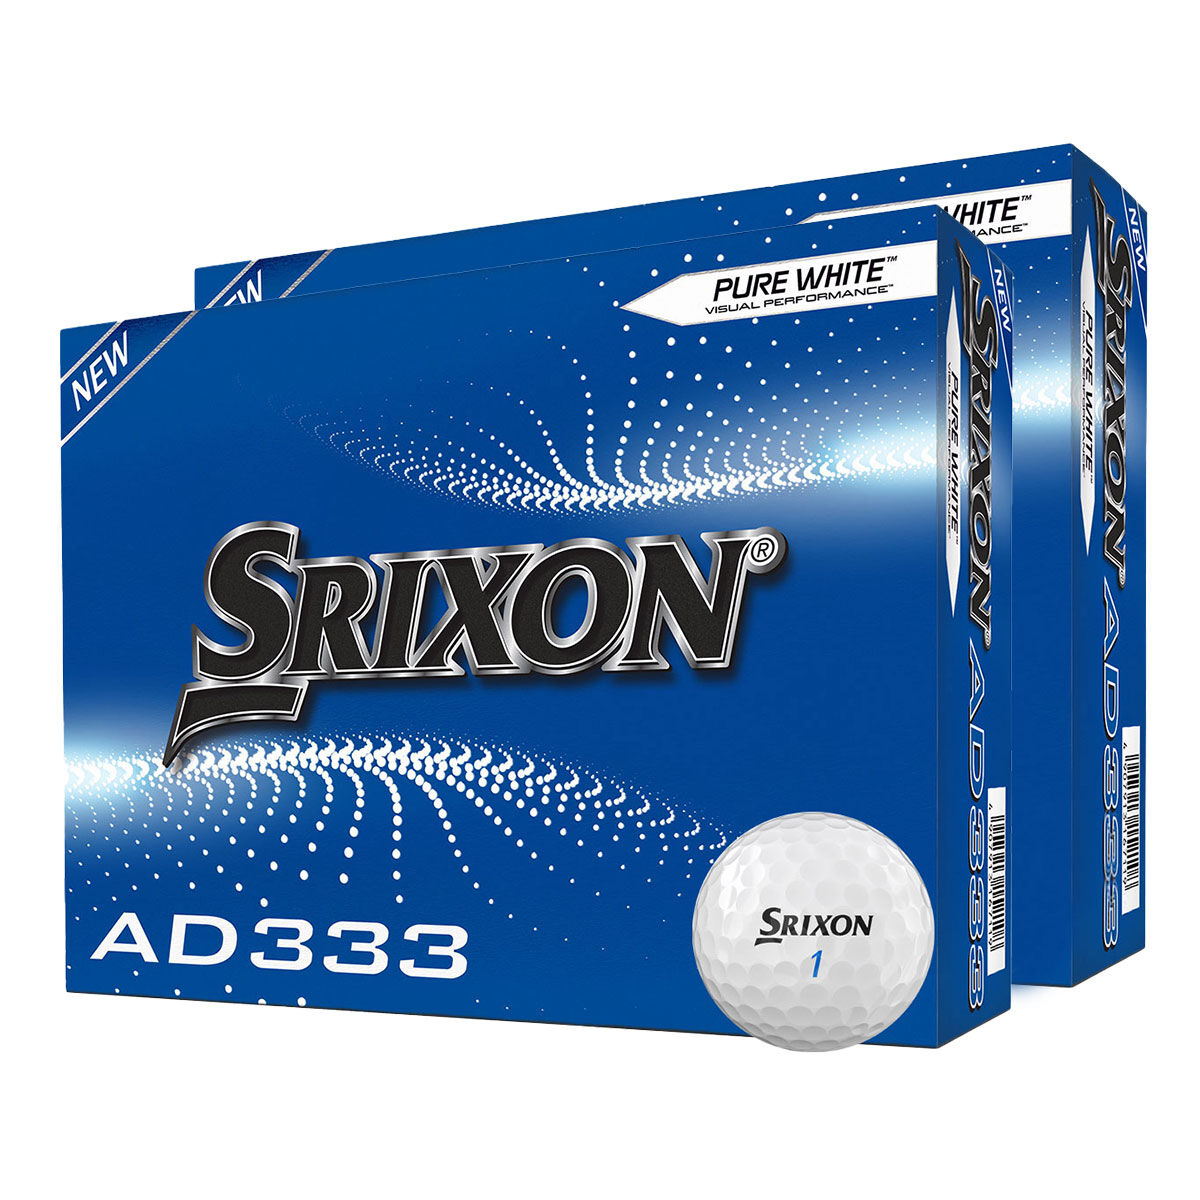 Srixon AD333 24 Golf Ball Pack, Mens, White | American Golf